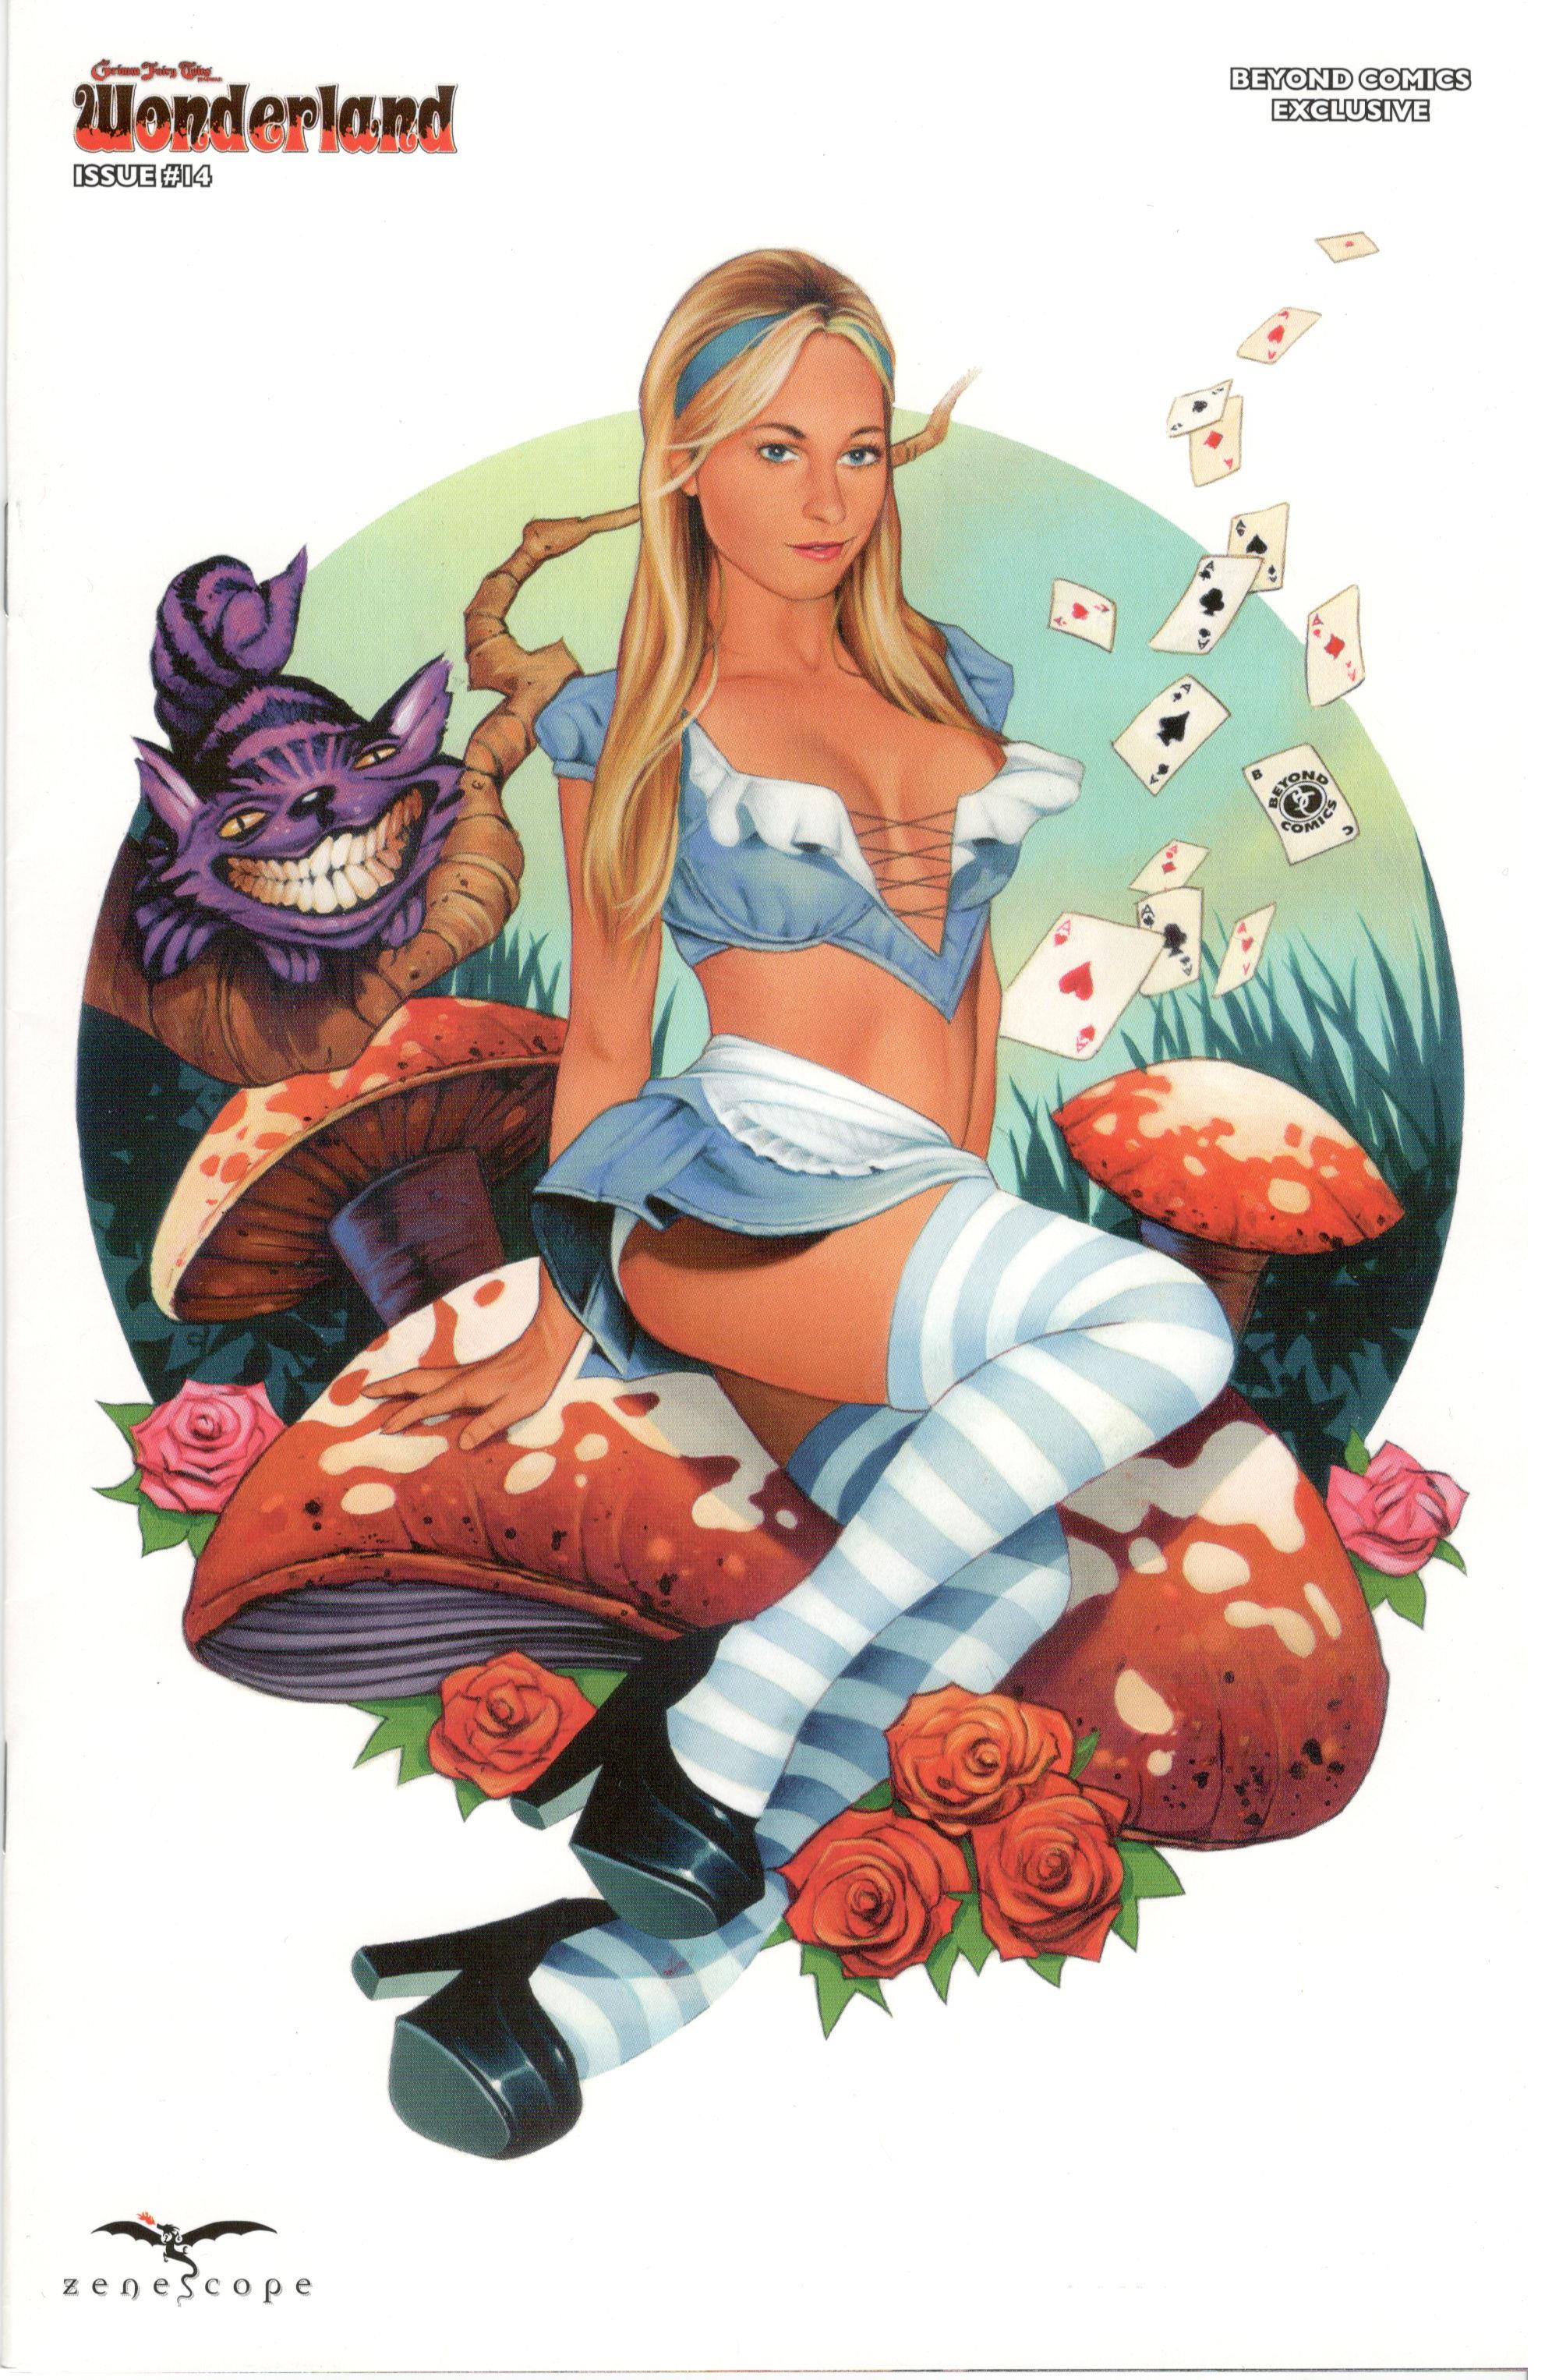 Grimm Fairy Tales Wonerland #14 Beyond Comics Dave Nestler Variant Cover